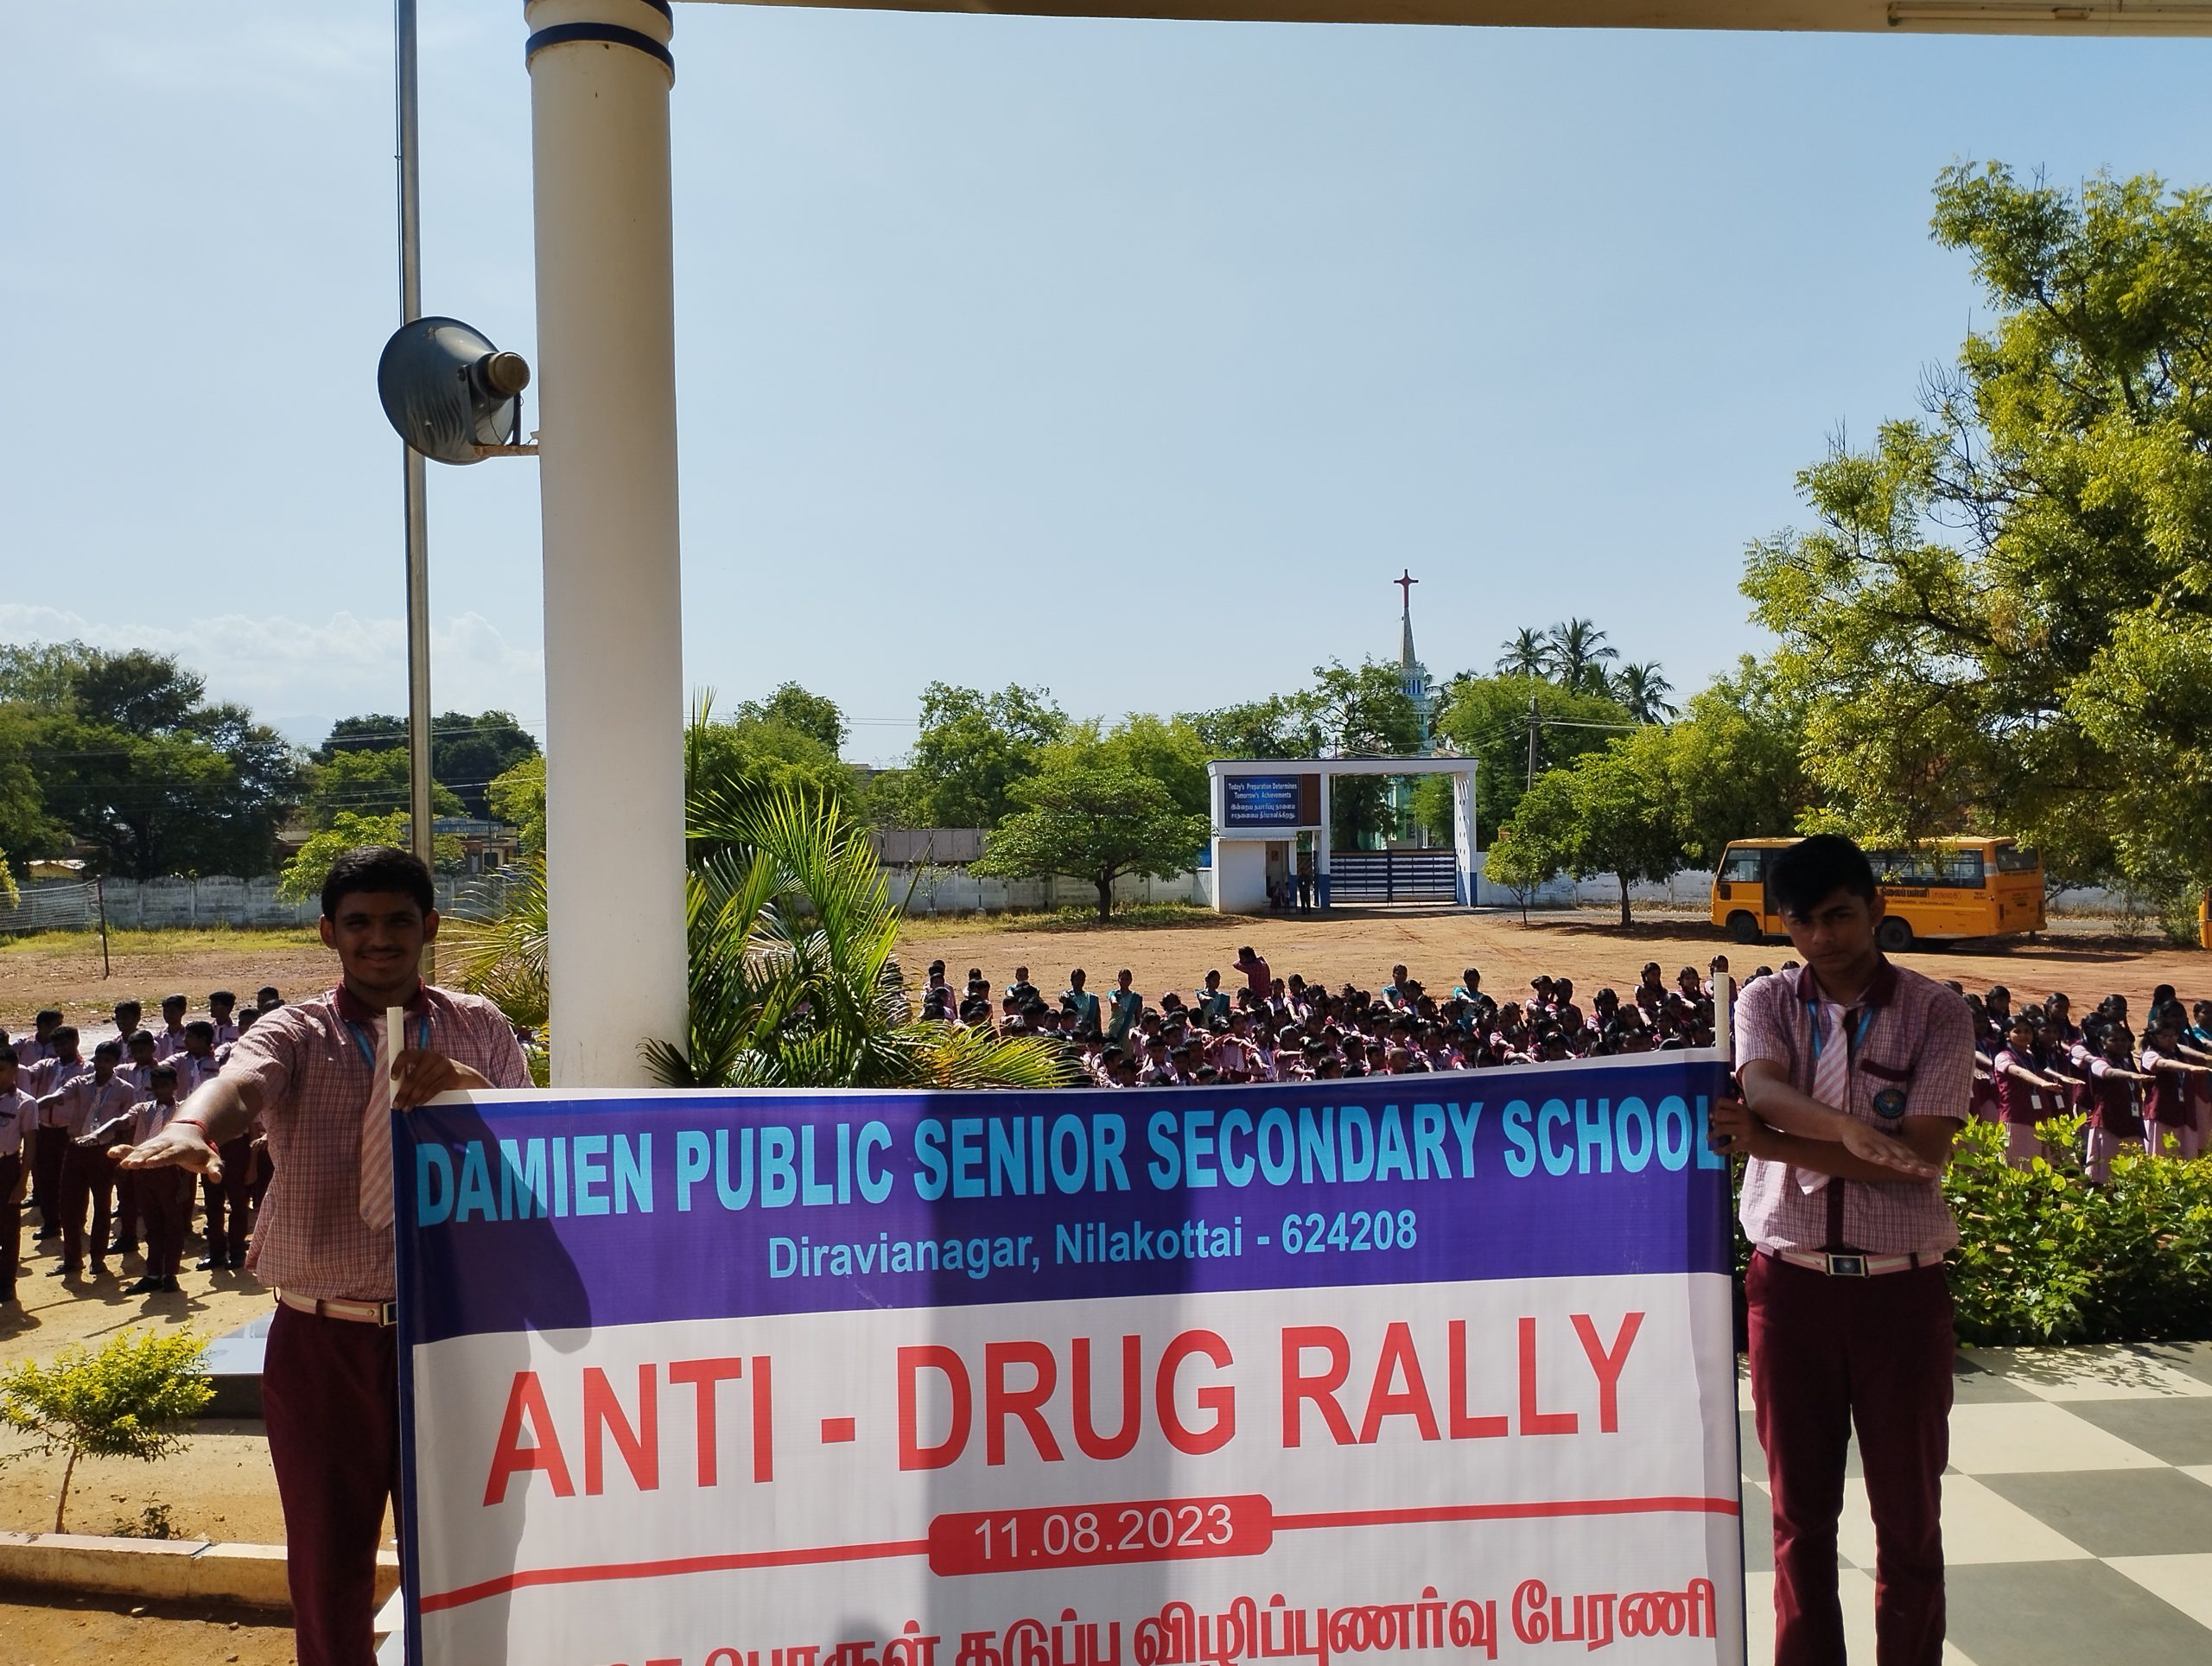 Anti-Drug Day Rally -11.08.2023